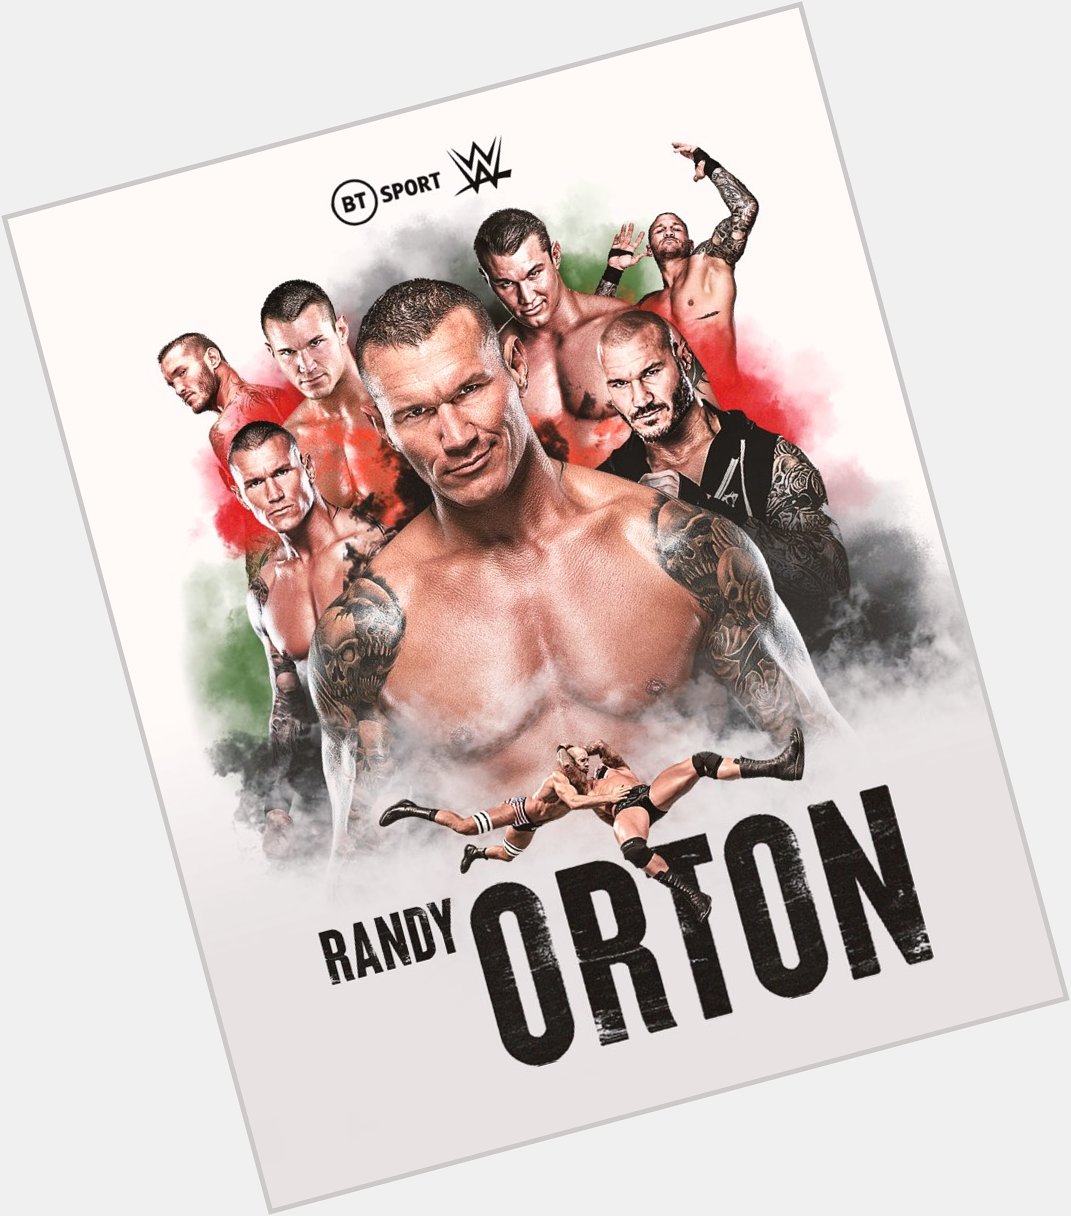 Happy Birthday to TheViper the great Randy Orton.  